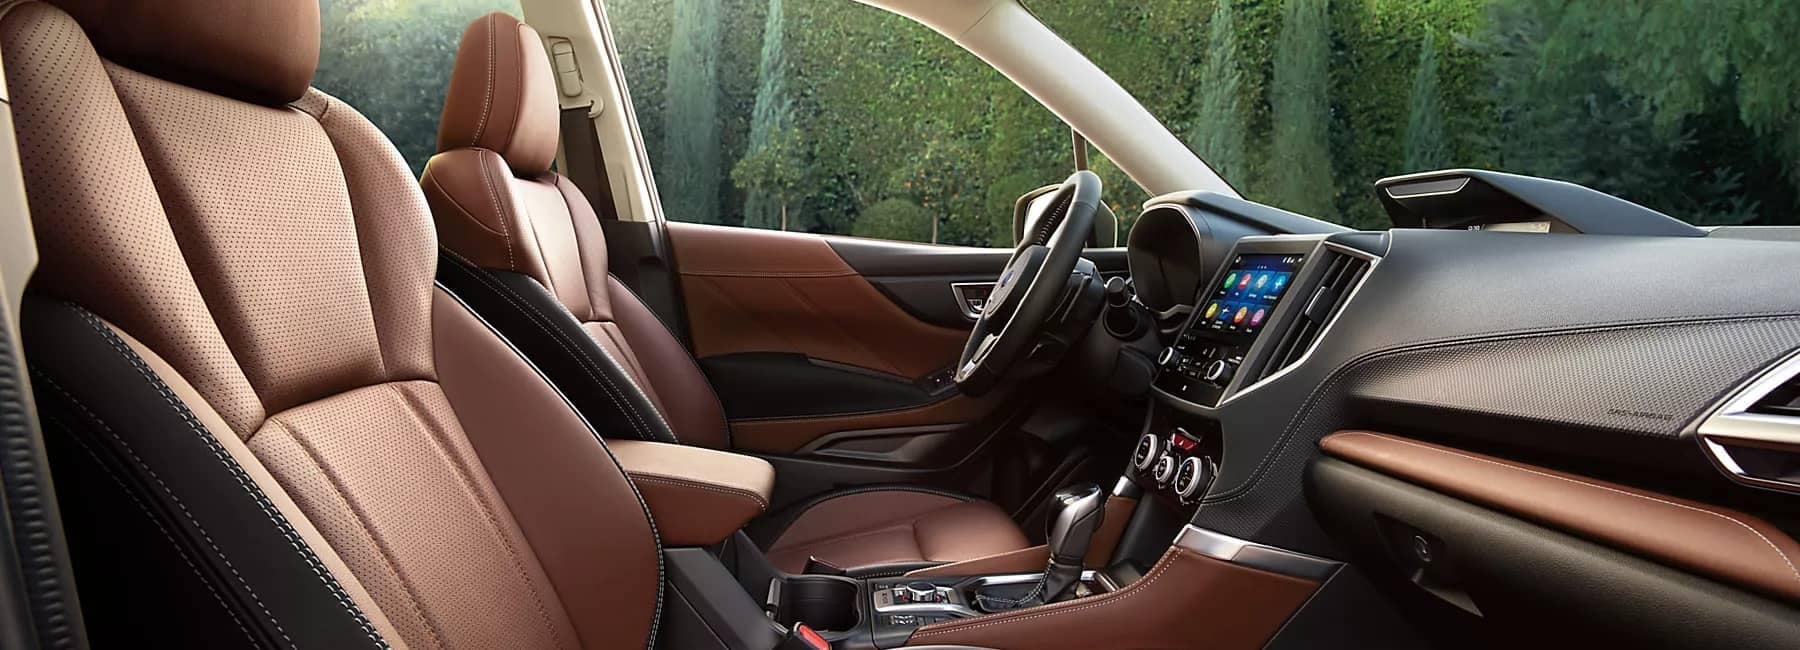 2022 Subaru Forester interior passenger side view tan black